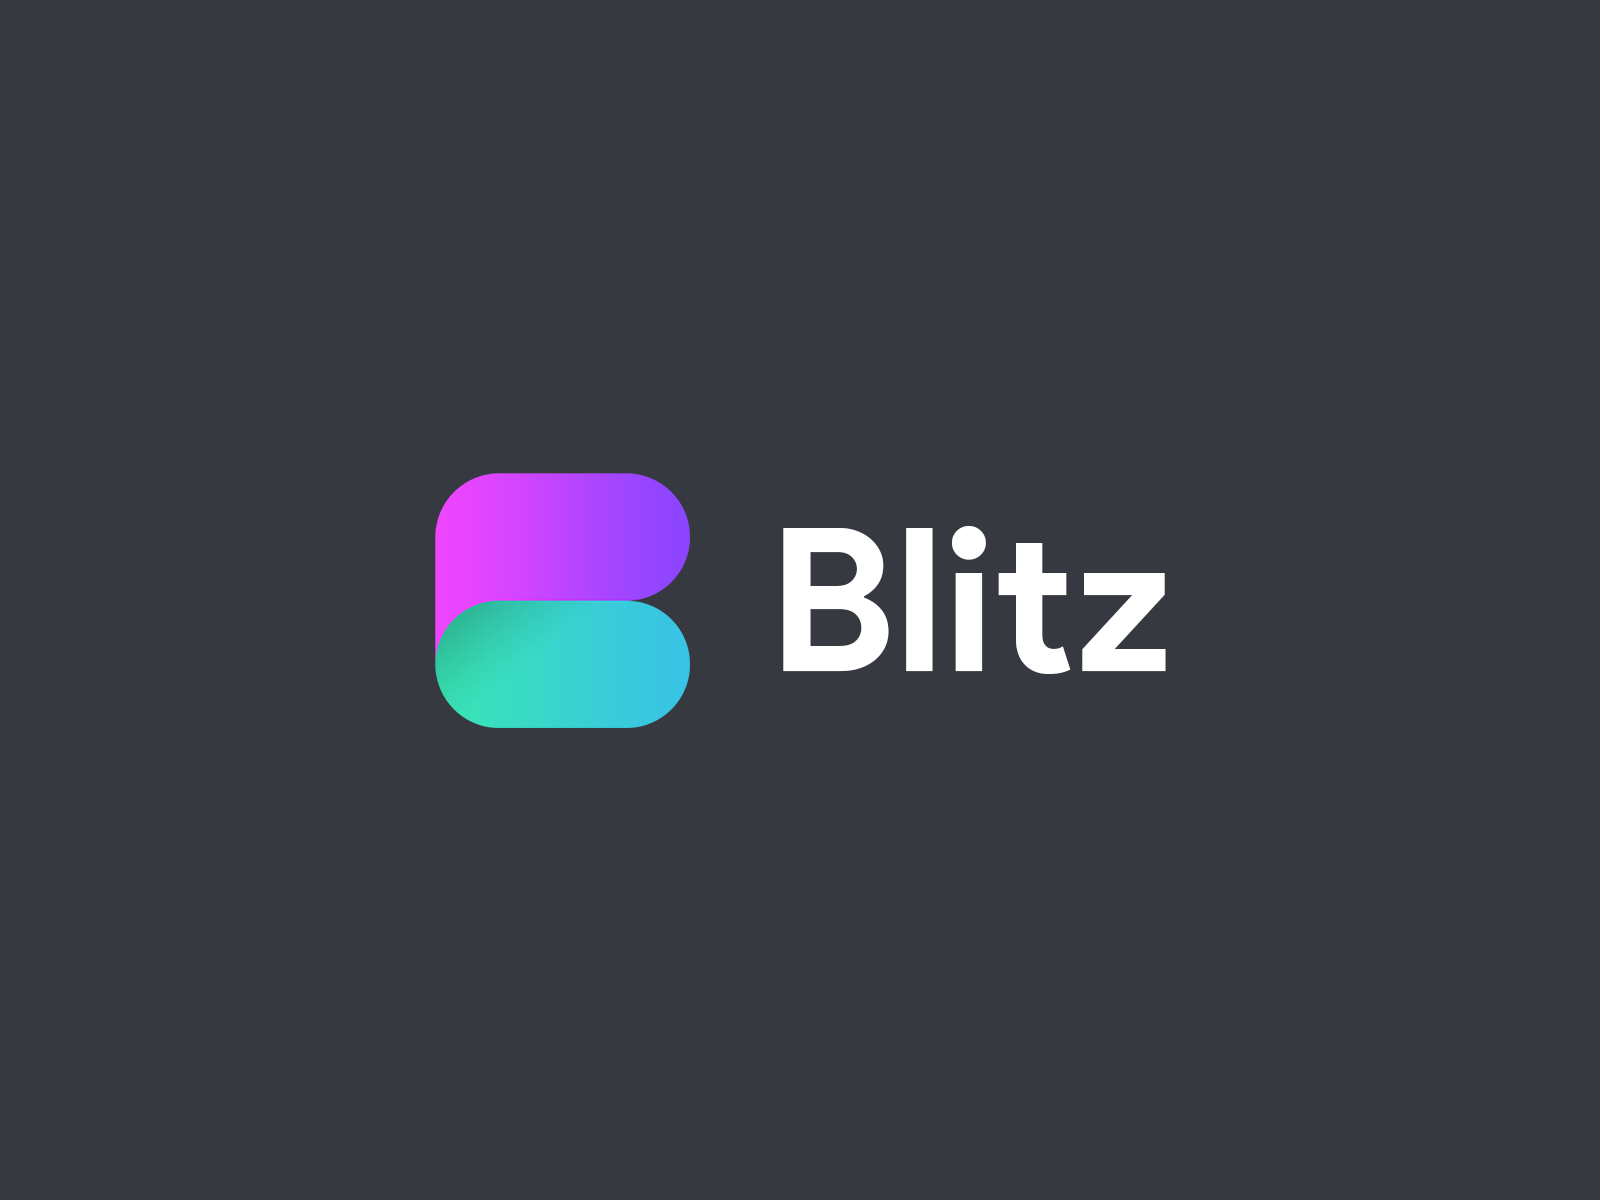 Blitz - Logo by Nikolai Justesen on Dribbble